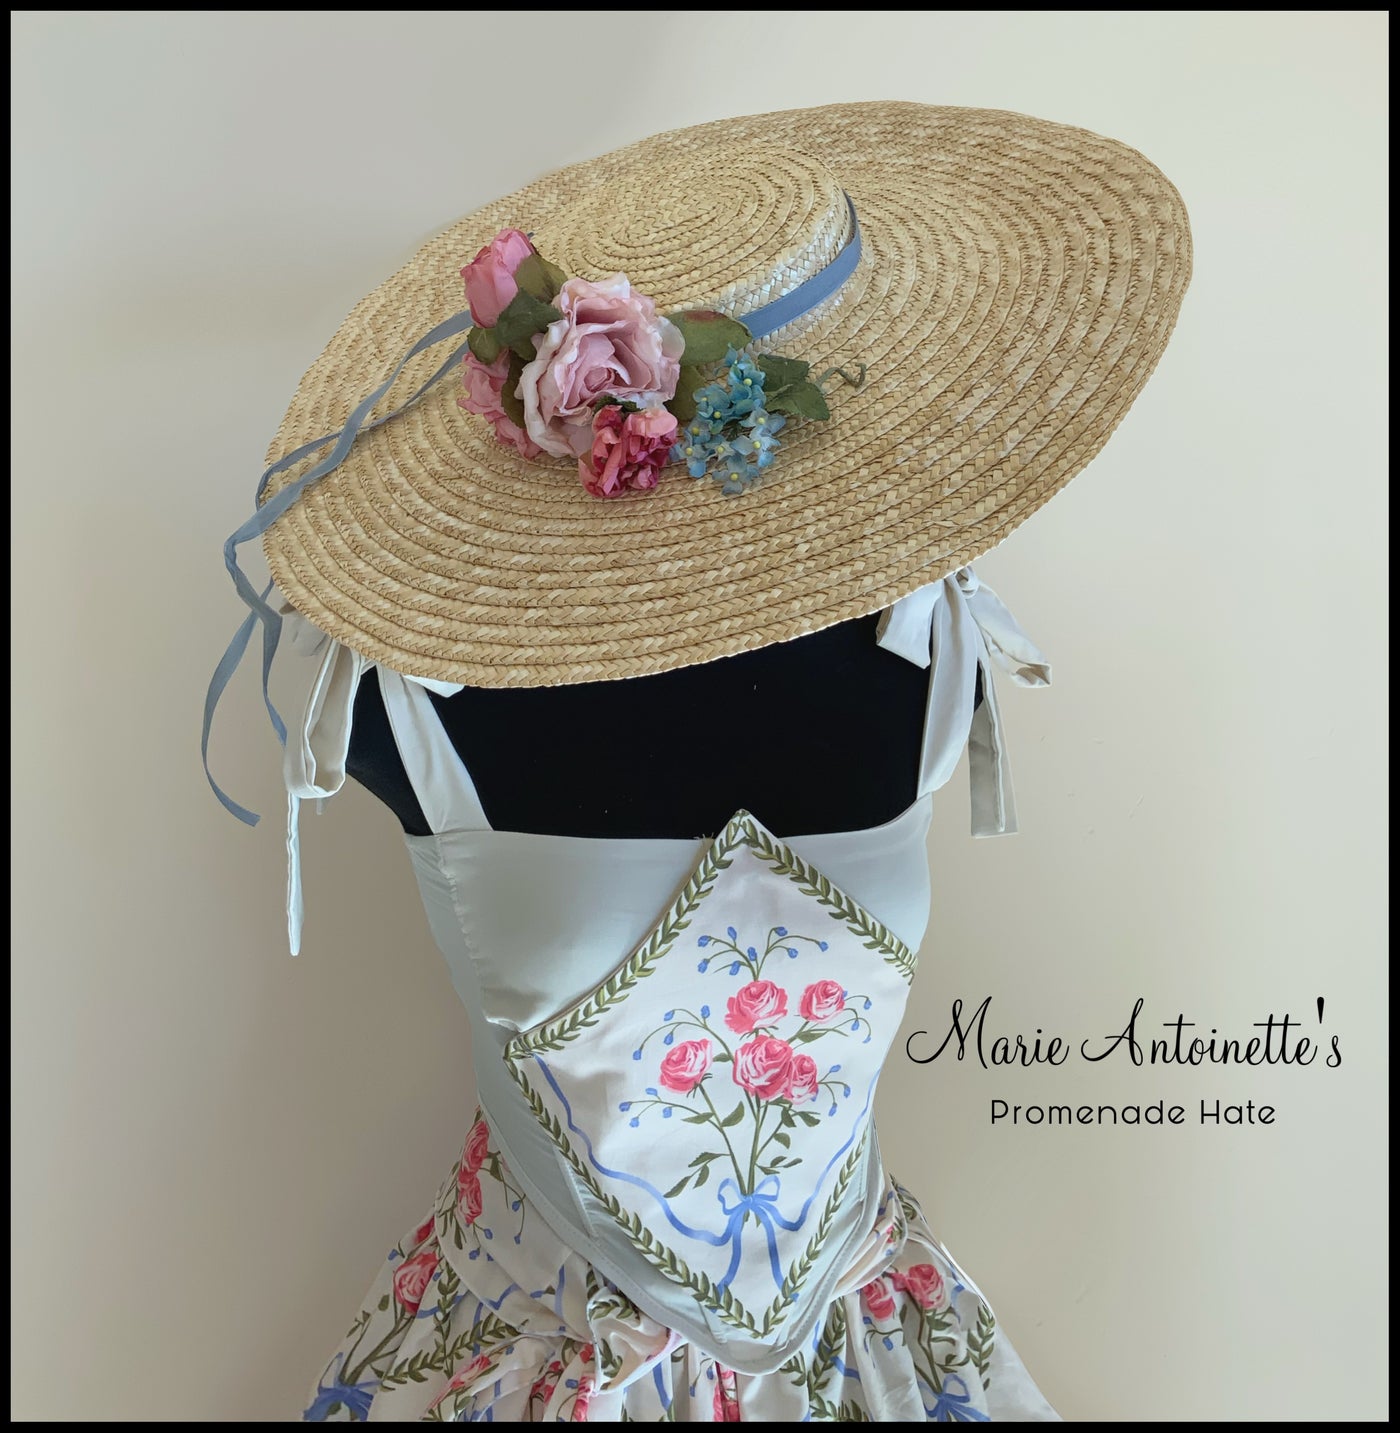 Marie Antoinette’s Promenade Hat